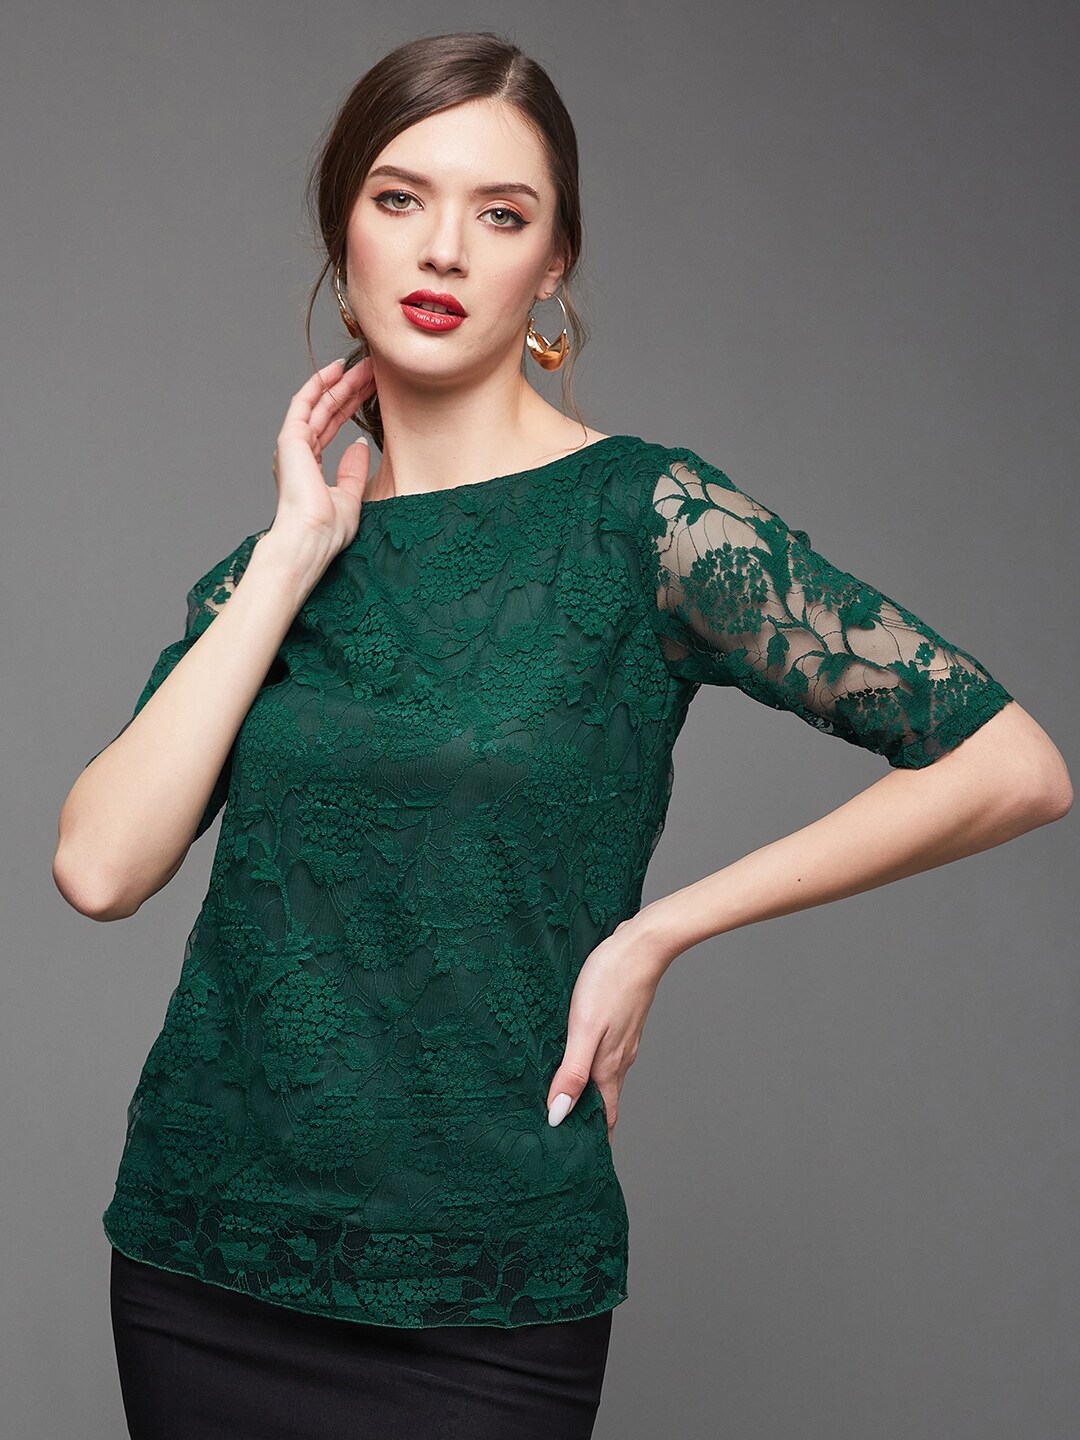 Buy Moomaya Printed Velvet Crop Tops For Women Adjustable